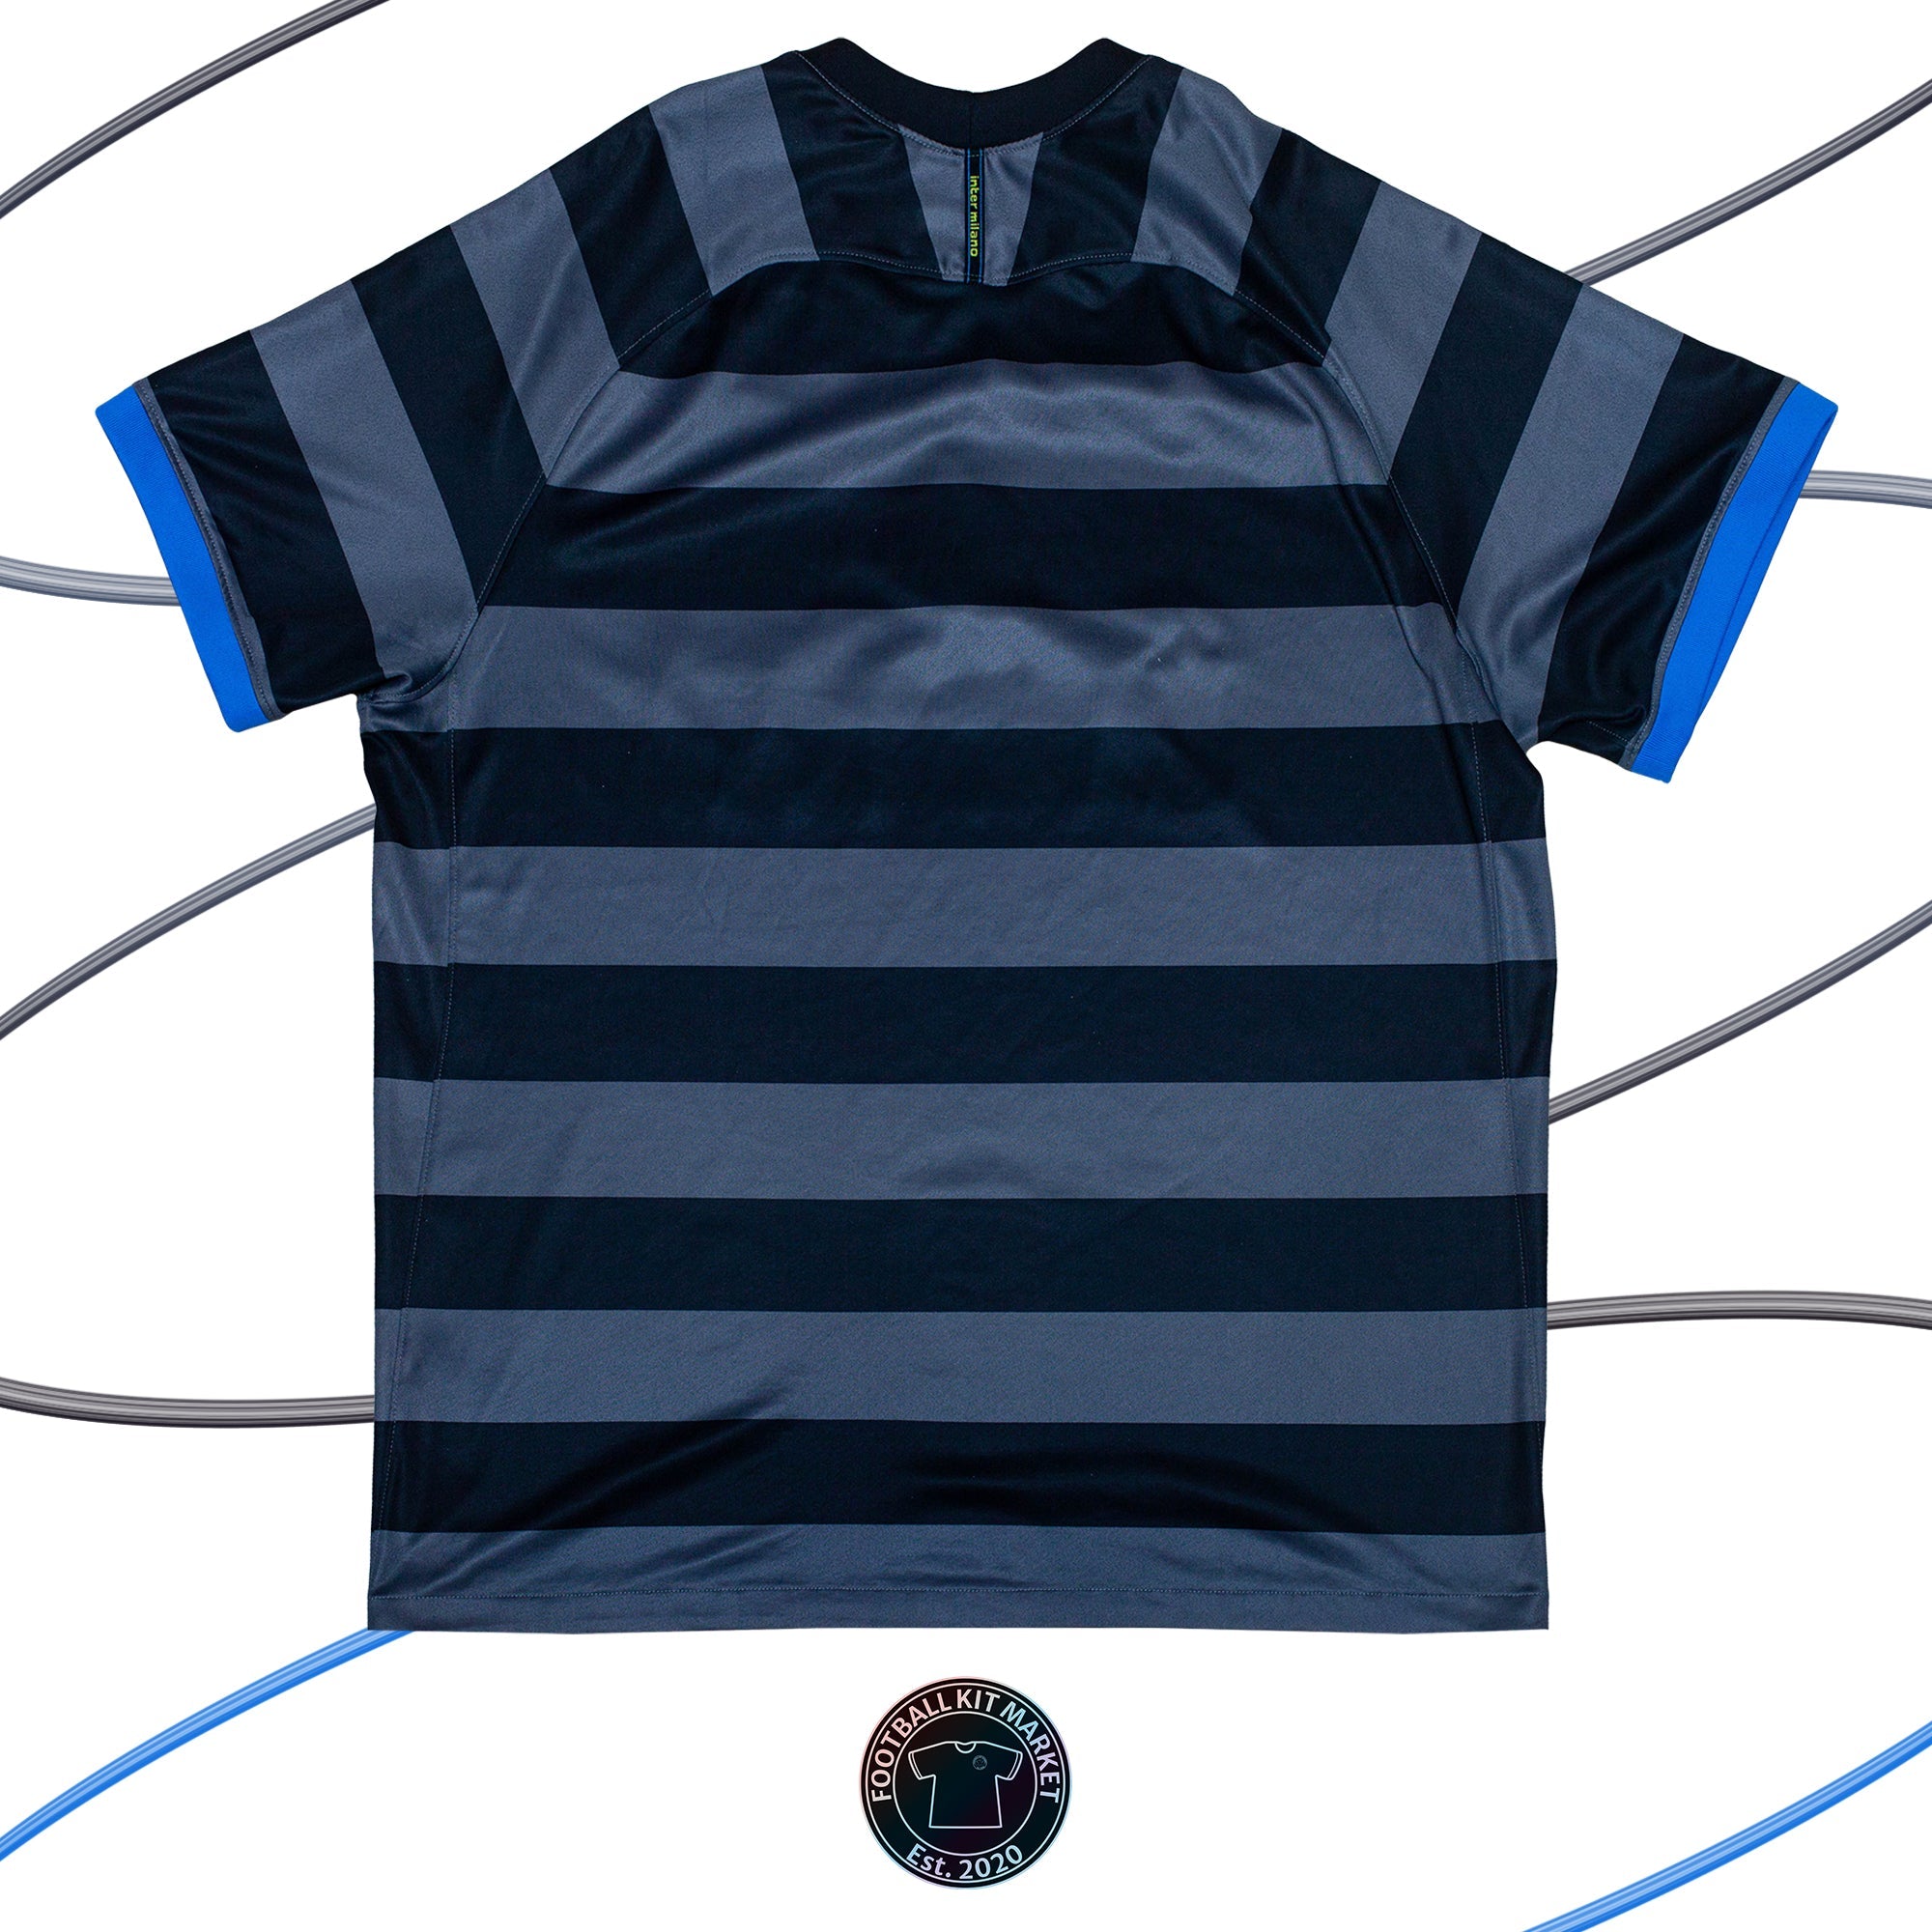 Genuine INTER MILAN 3rd Shirt (2020-2021) - NIKE (XXL) - Product Image from Football Kit Market